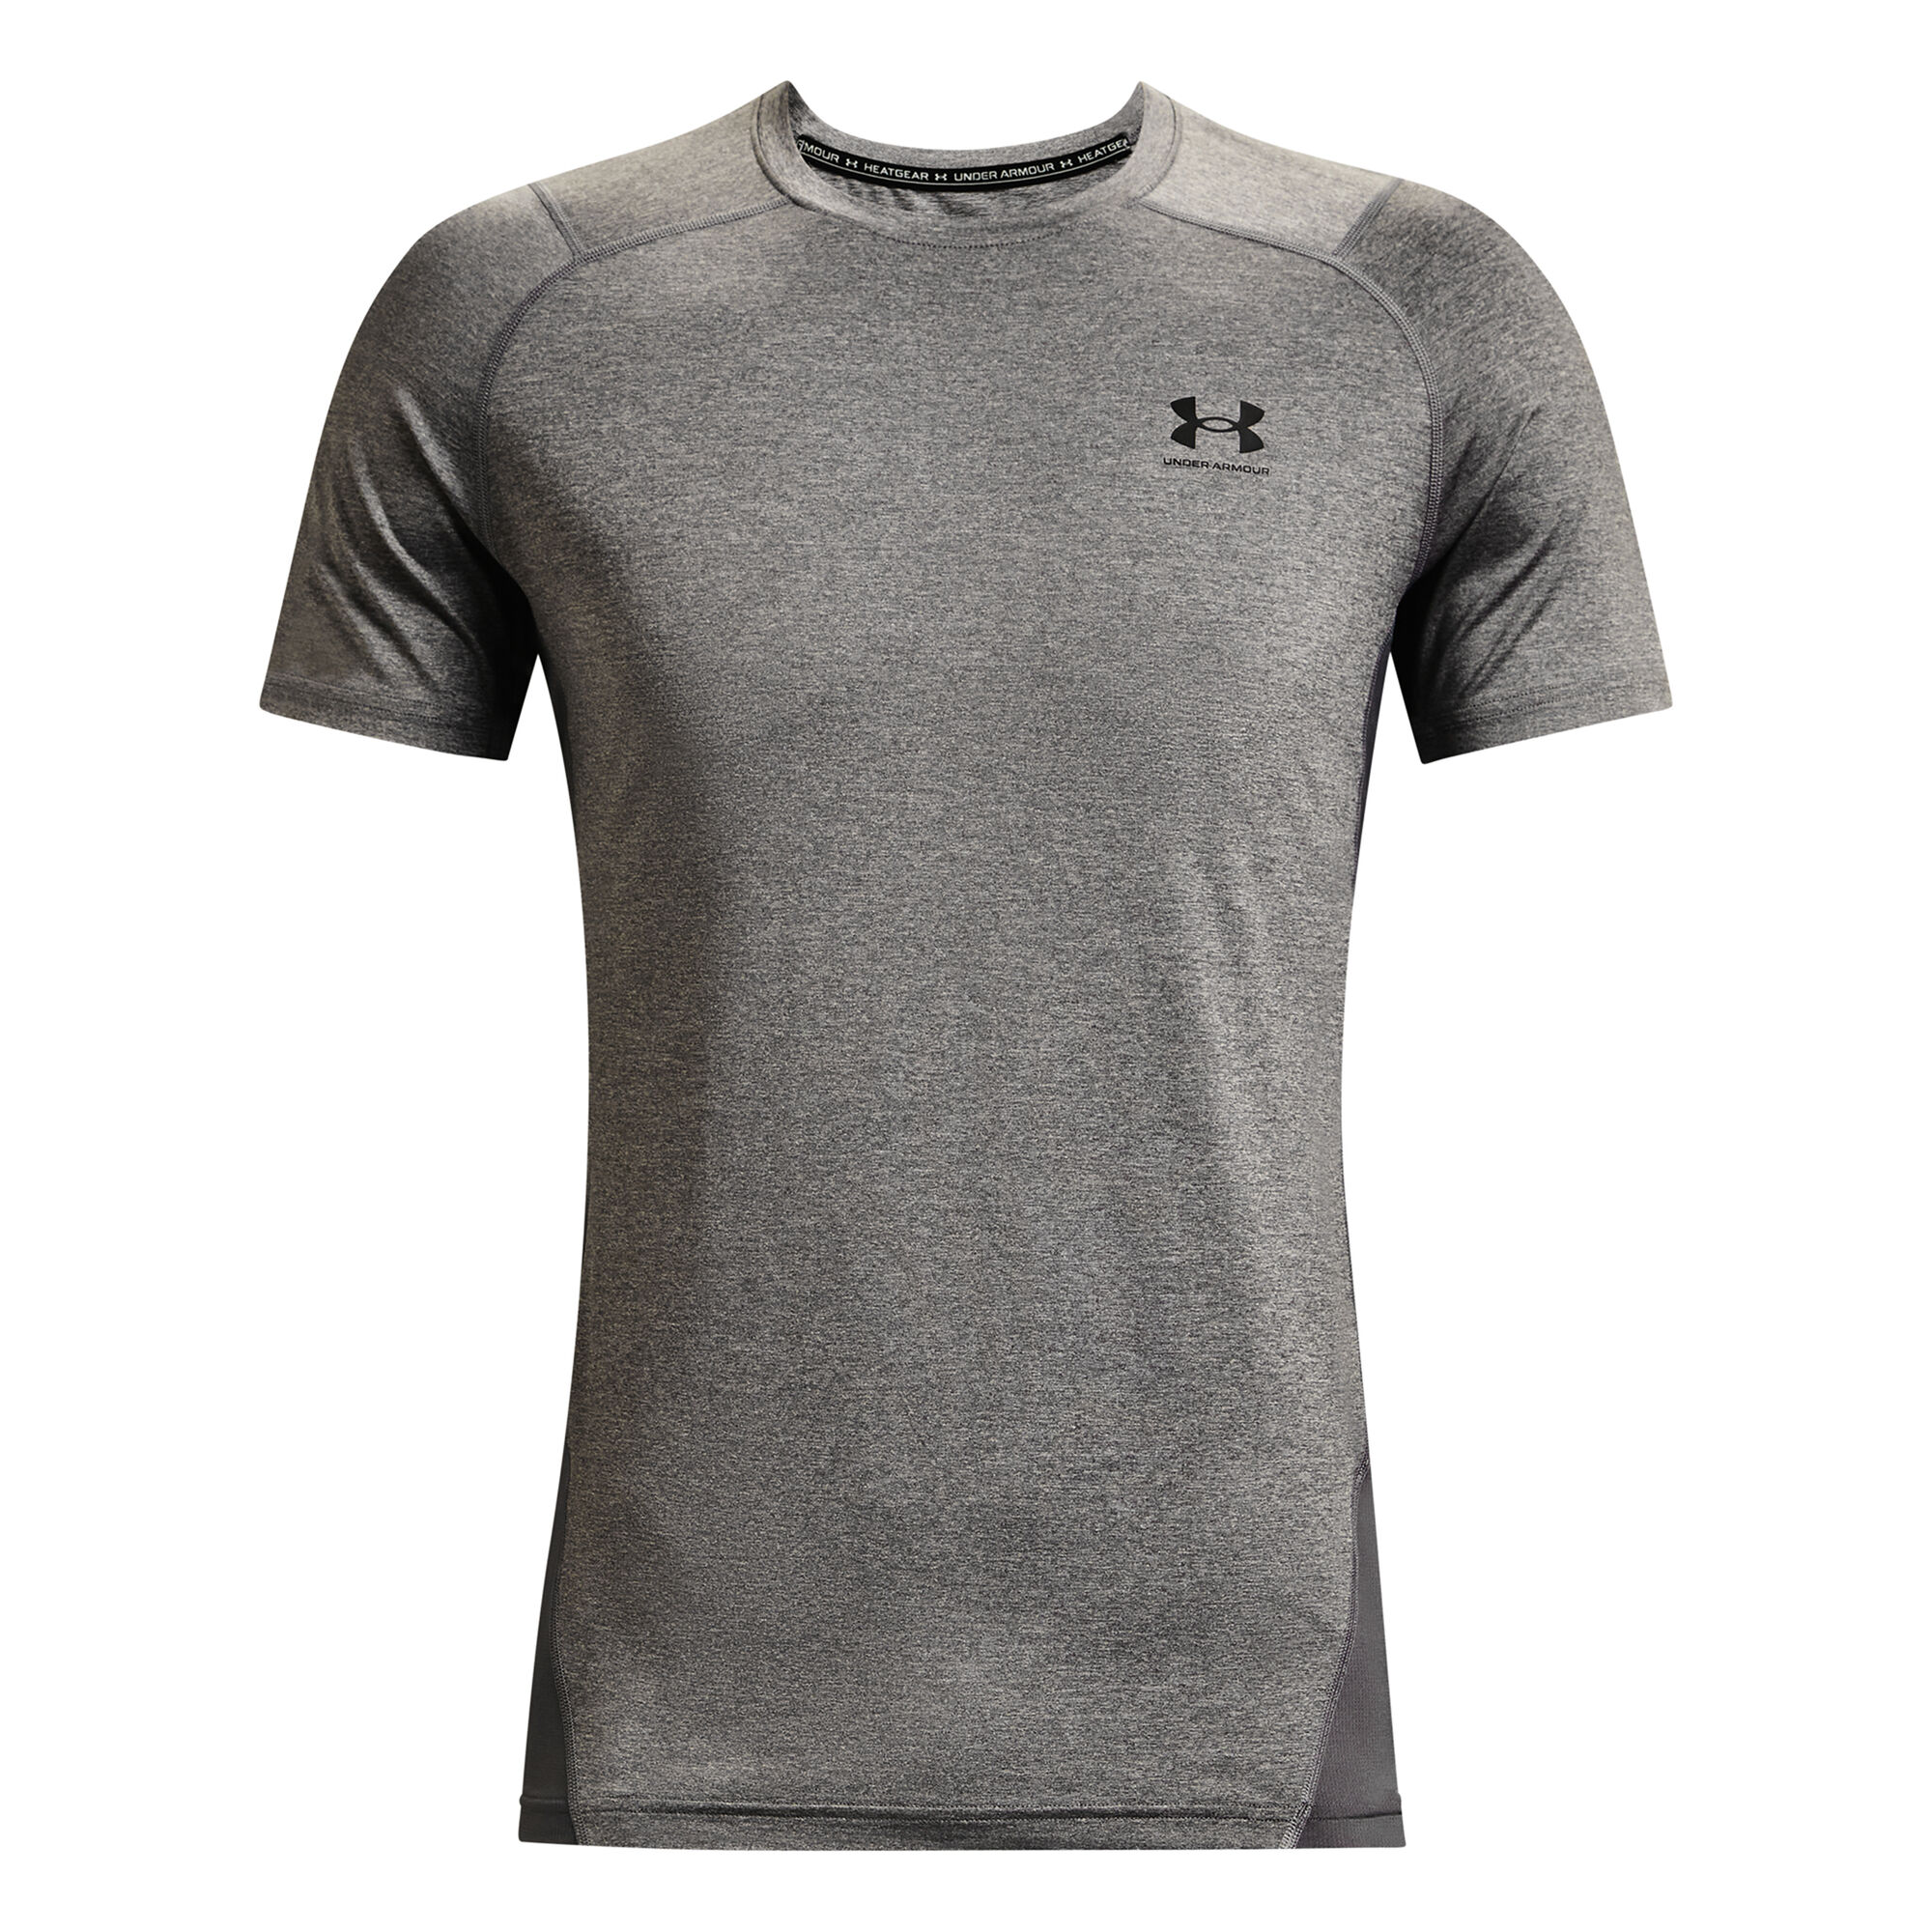 Buy Under Armour Heatgear Fitted T-Shirt Men Grey online